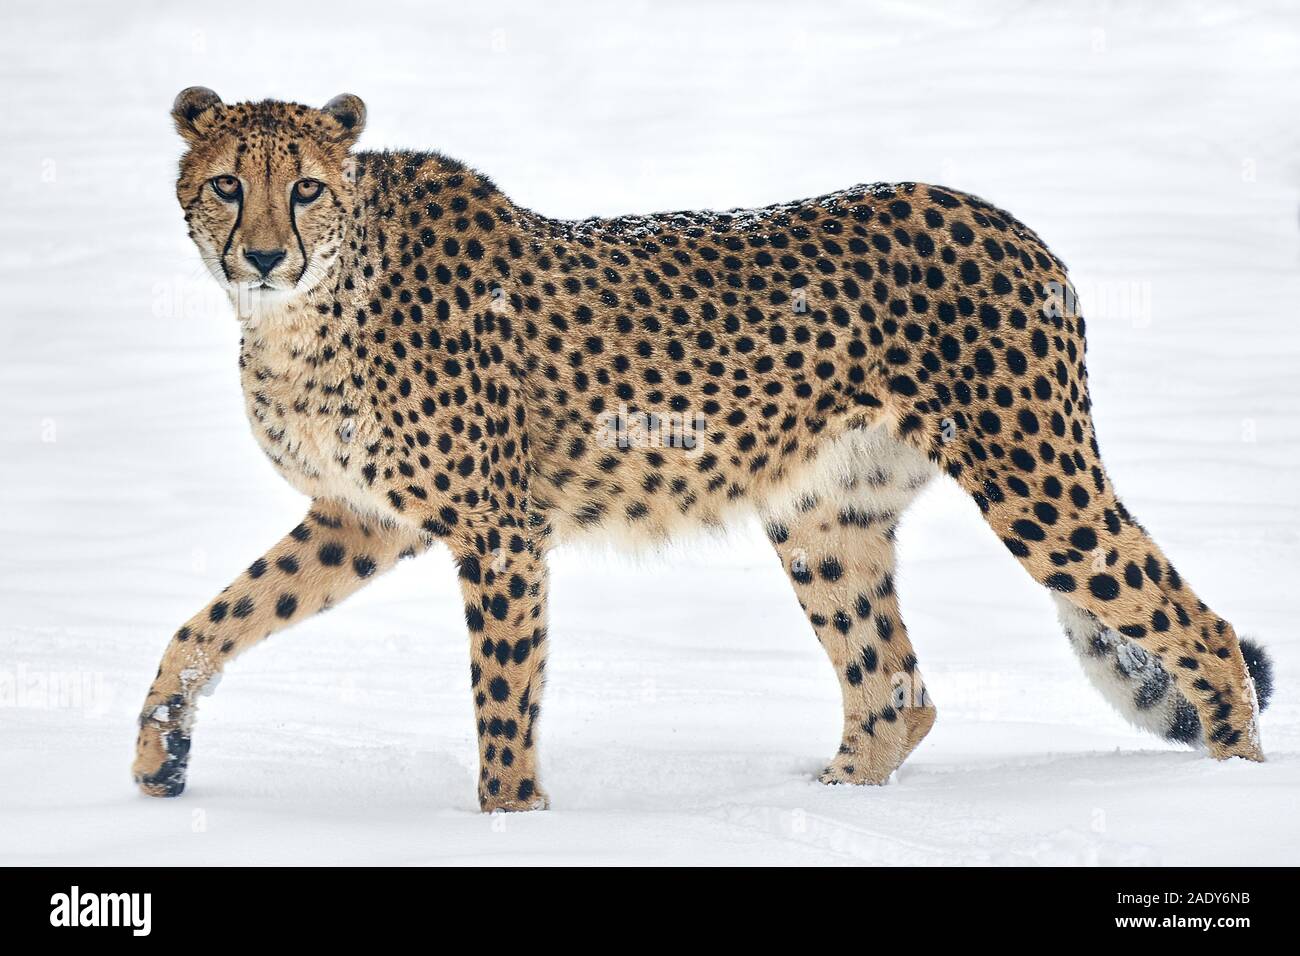 Cheetah Making Eye Contact While Walking in Snow Stock Photo